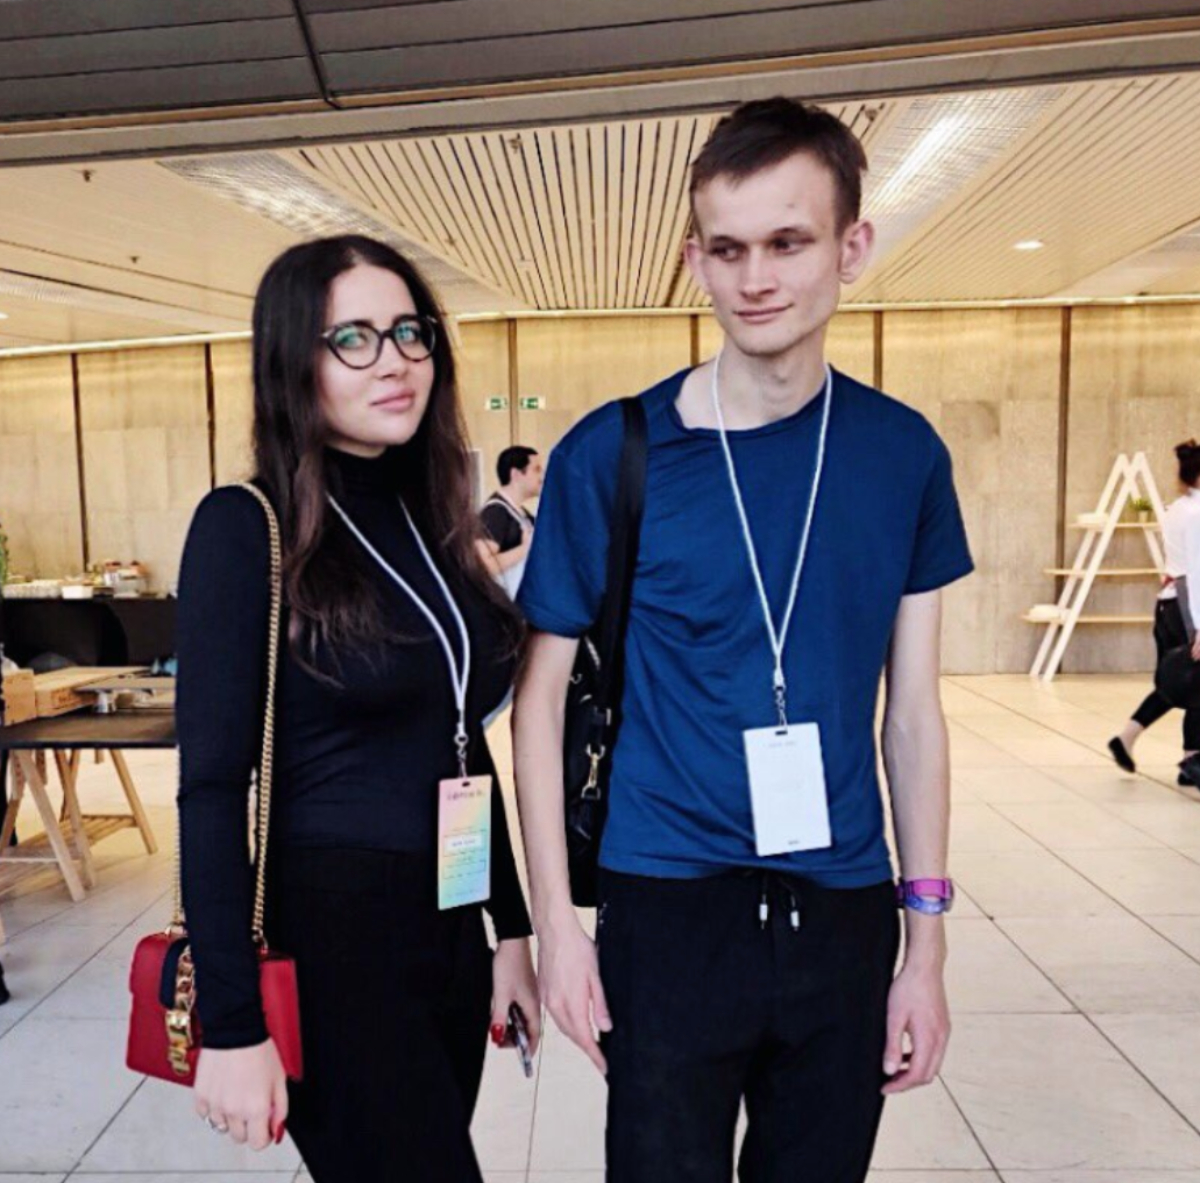 KIRA founder Milana Valmont and Ethereum founder Vitalik Buterin in 2018